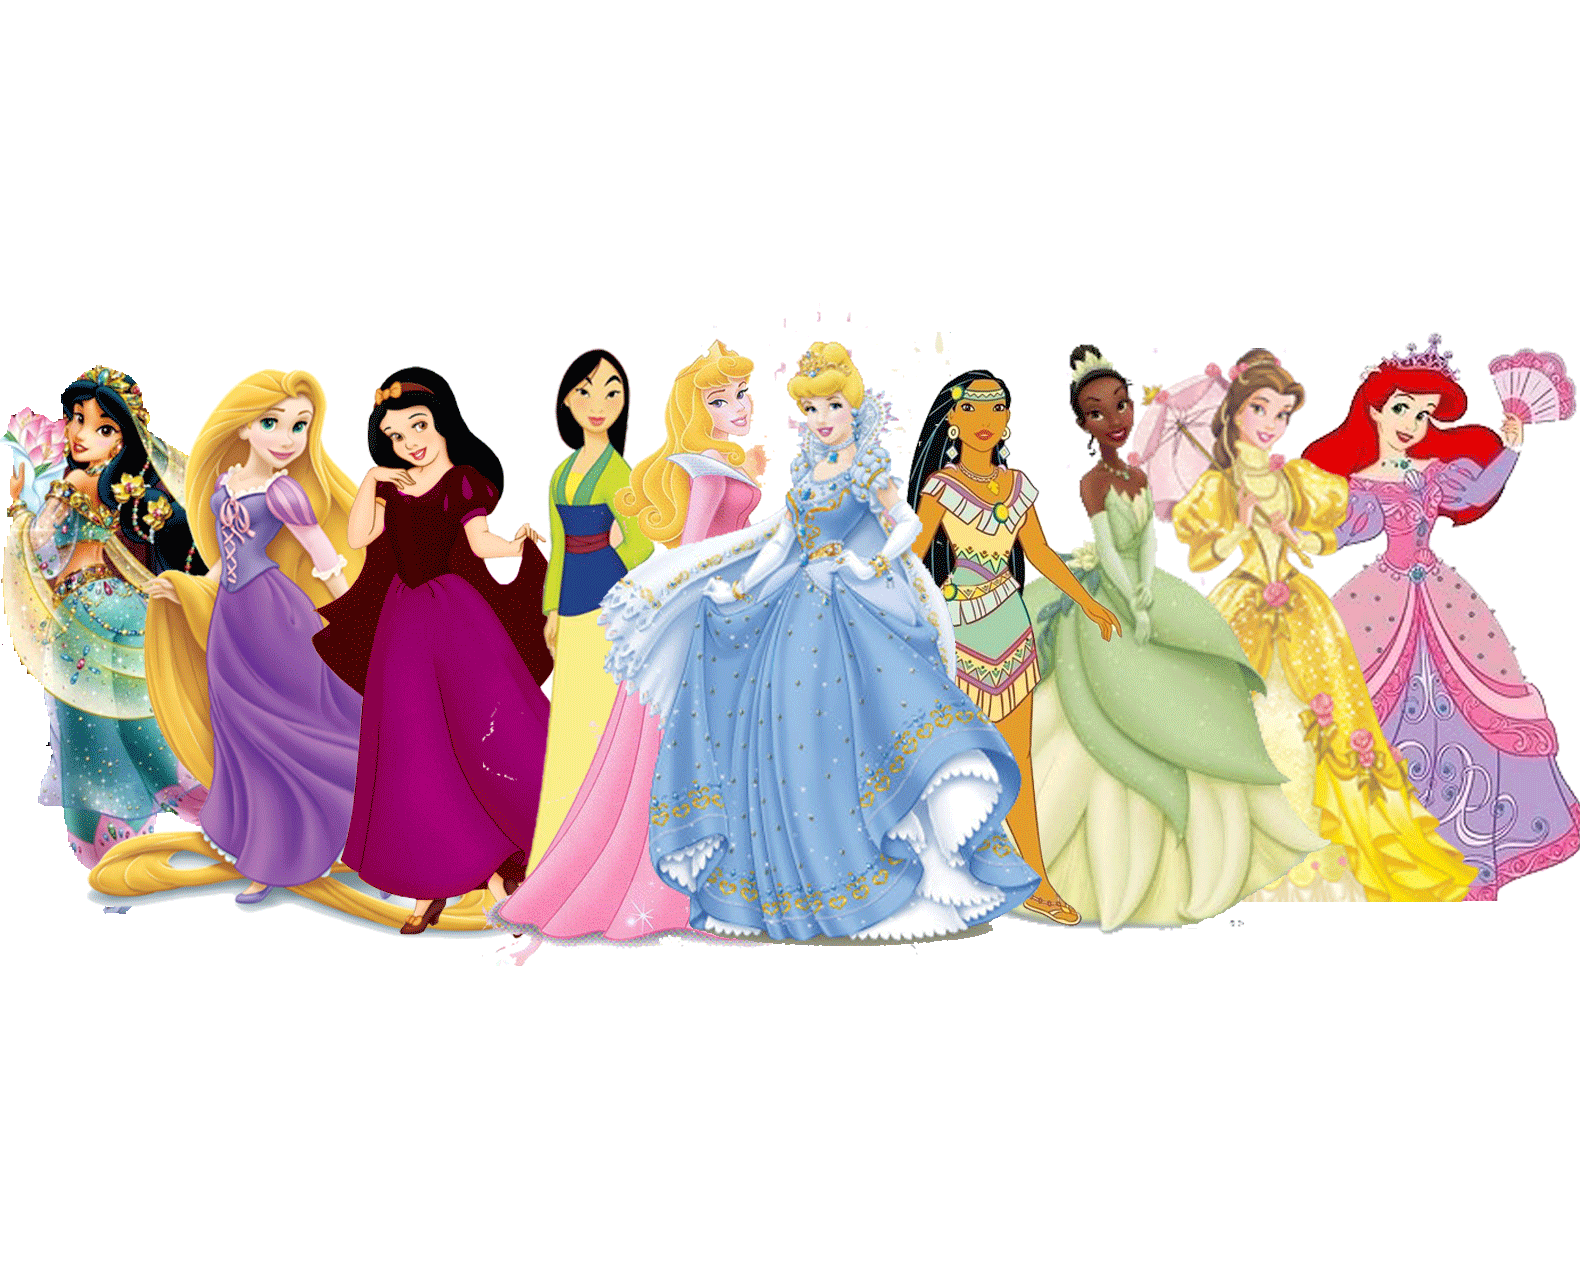 Disney Princess desktop picture, Disney Princess desktop